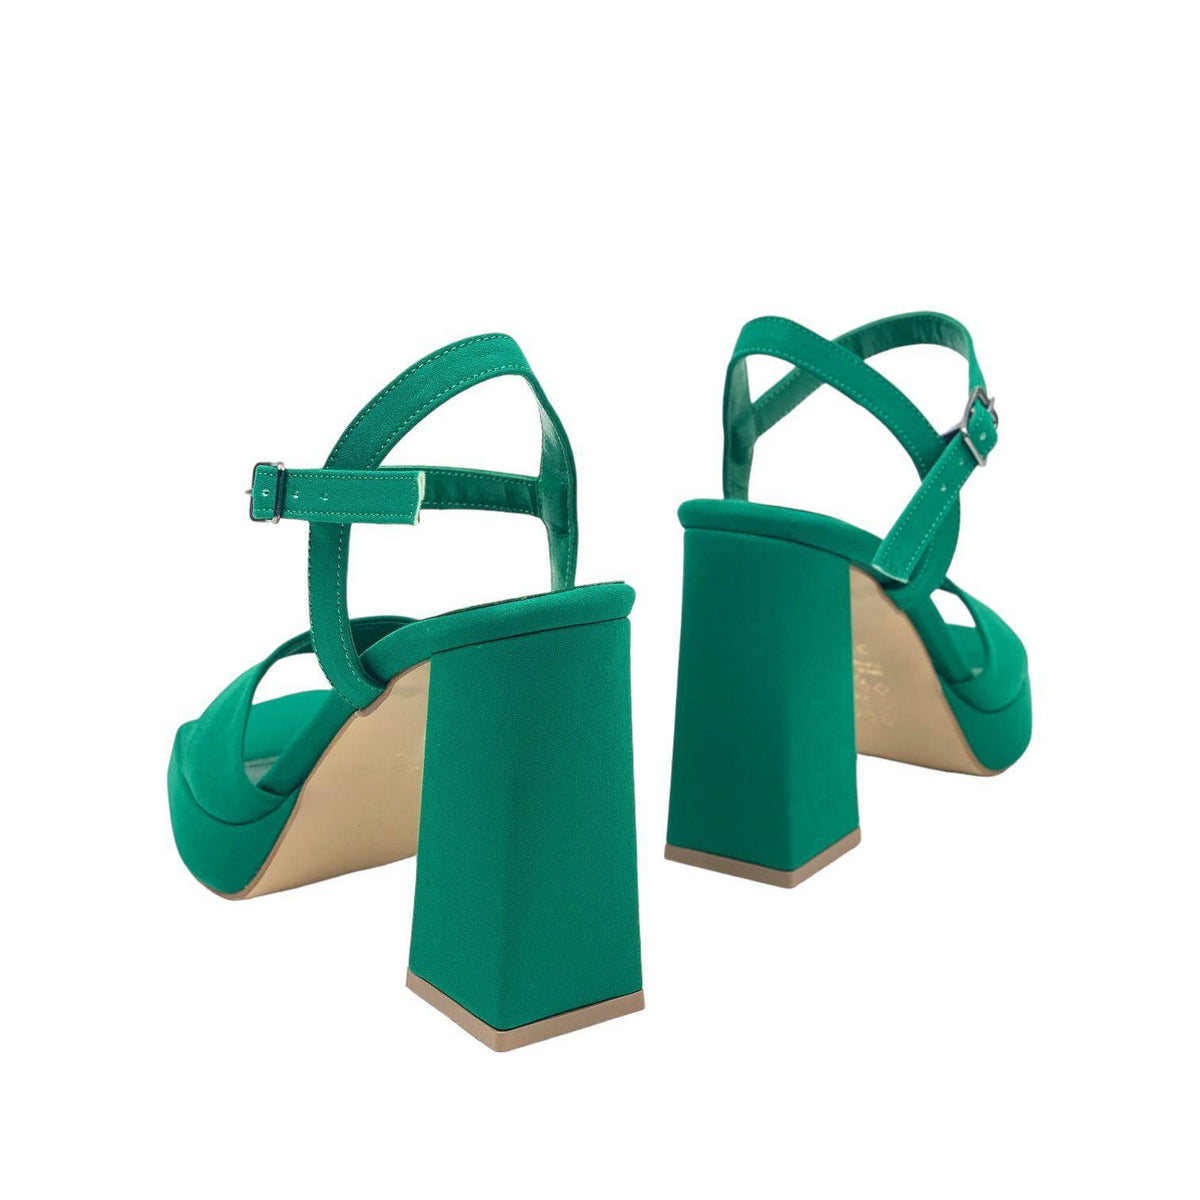 Women's Corset Green Single Strap Ankle Strap High Heel Platform Satin Shoes - STREETMODE ™